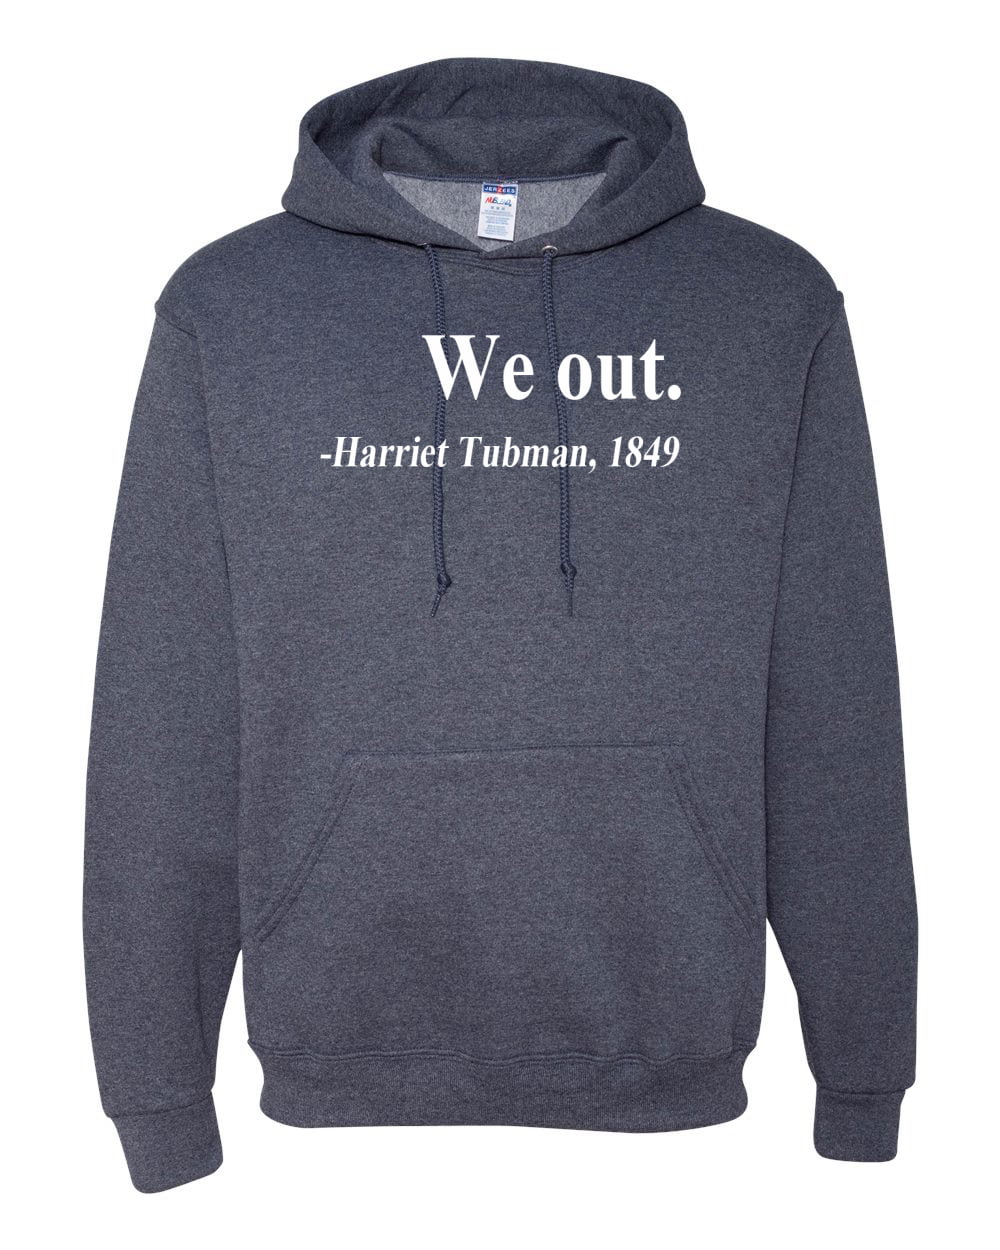 Shop4Ever We Out 1849 Hoodies Black History Sweatshirts Harriet Tubman 